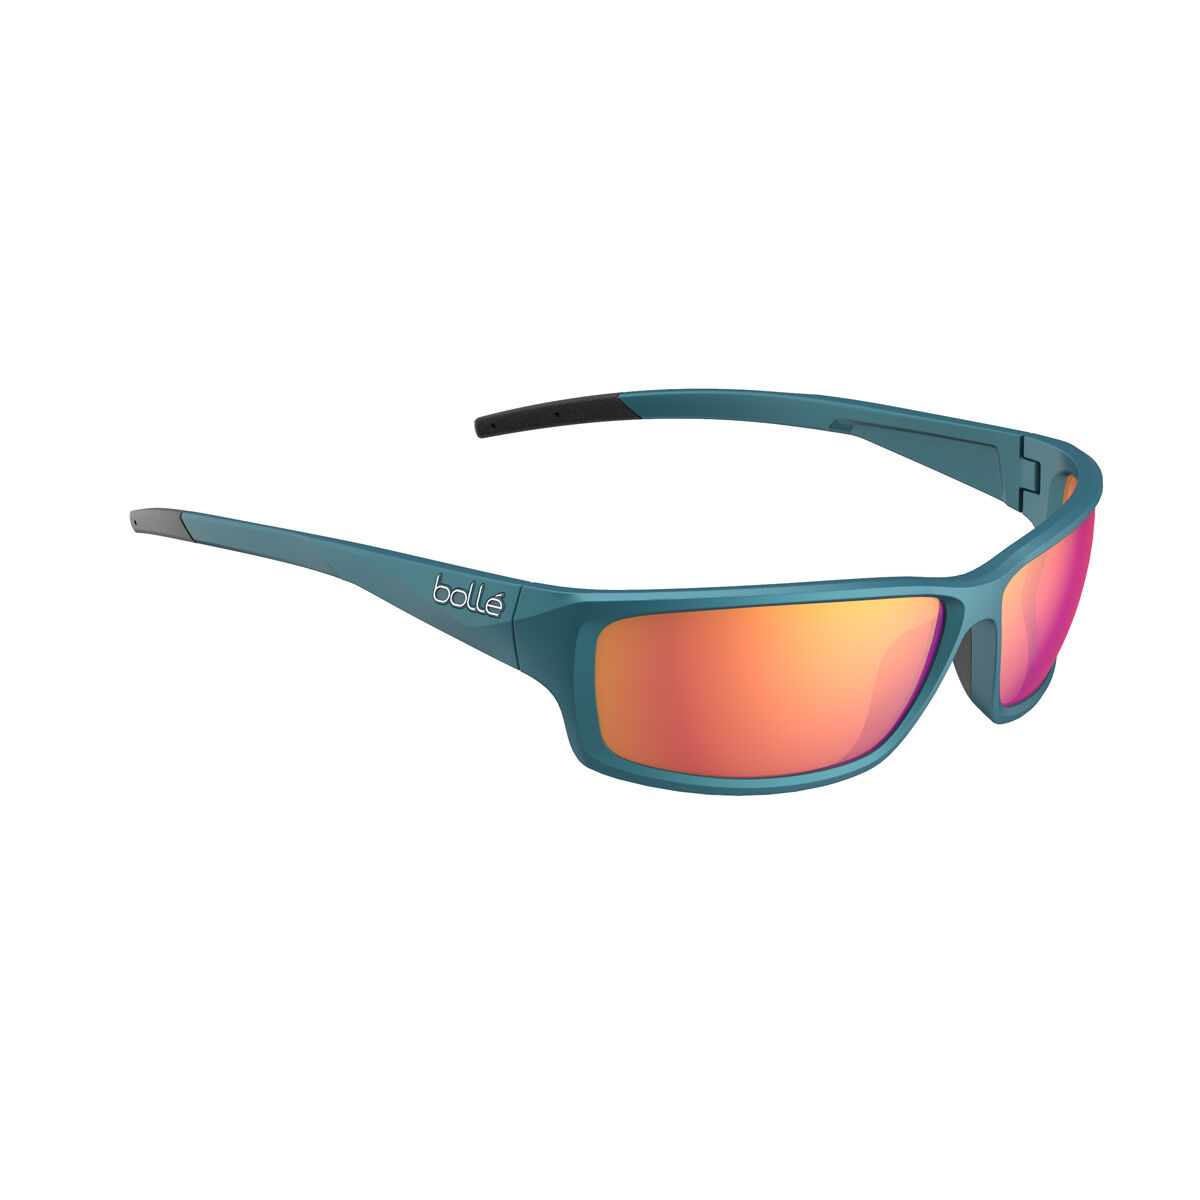 Bollé Radiant - Gold - Axis Polarised - Sunglasses For Sport